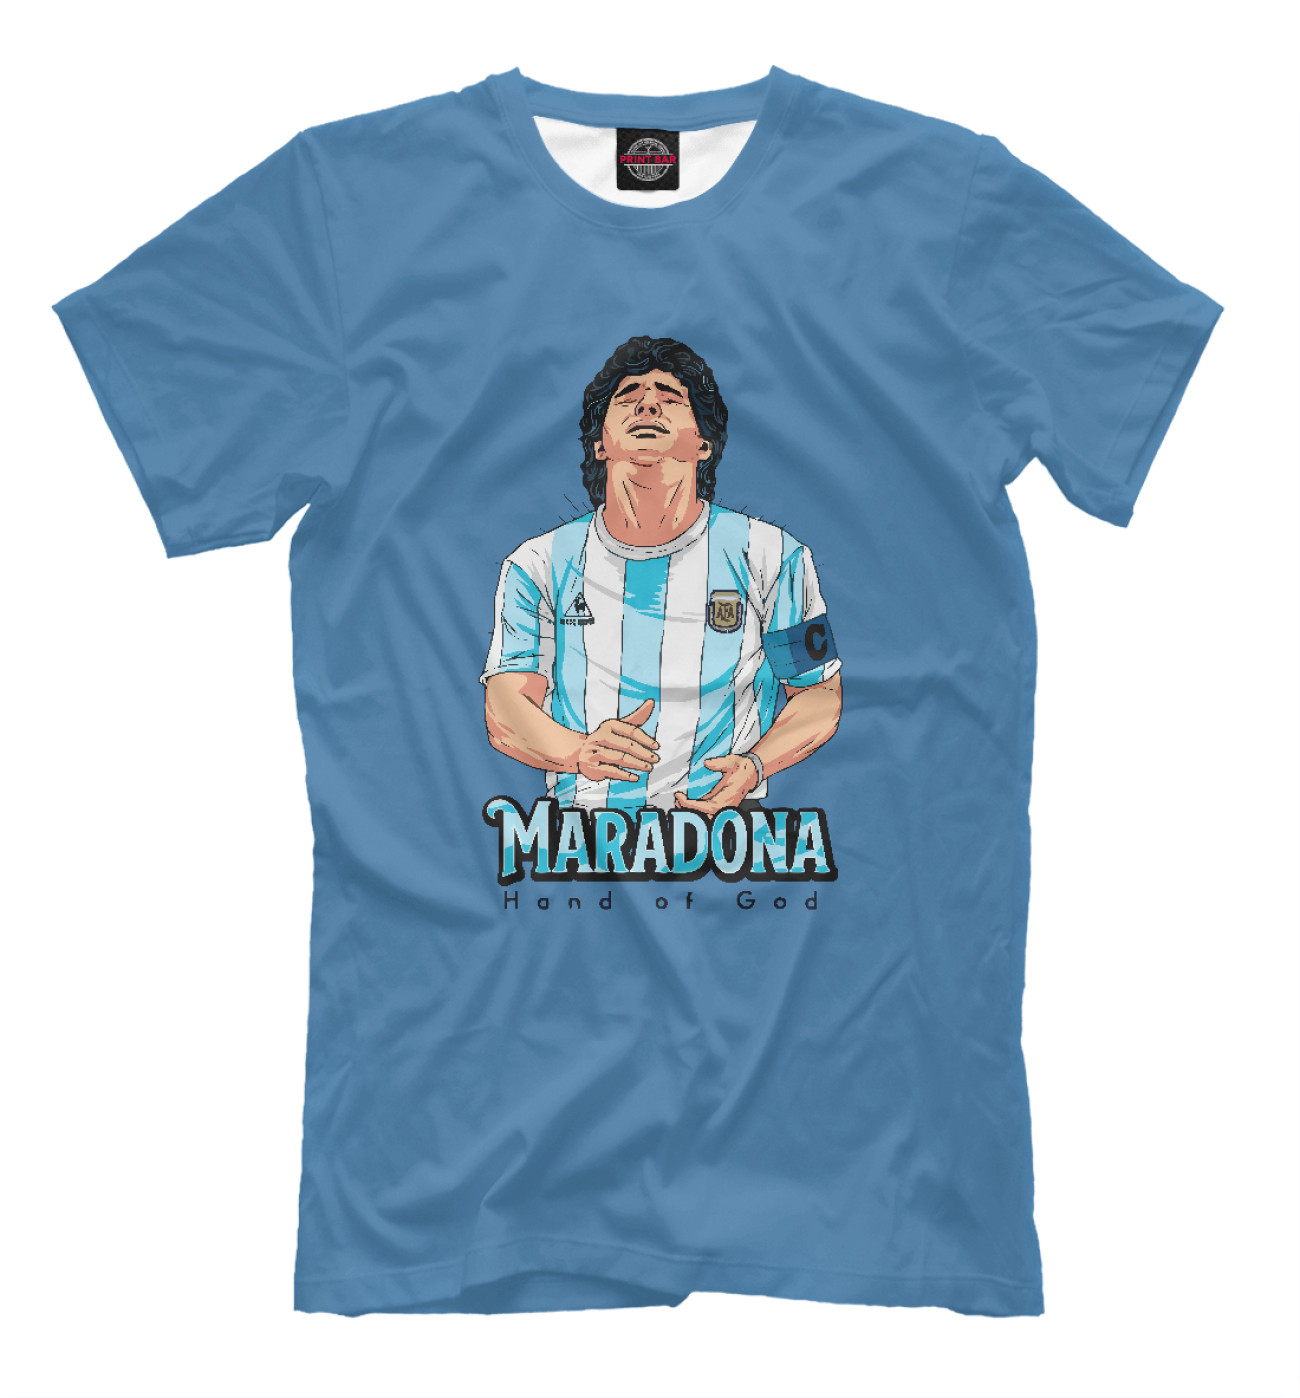 Мужская Футболка Марадона, артикул: FLT-376870-fut-2